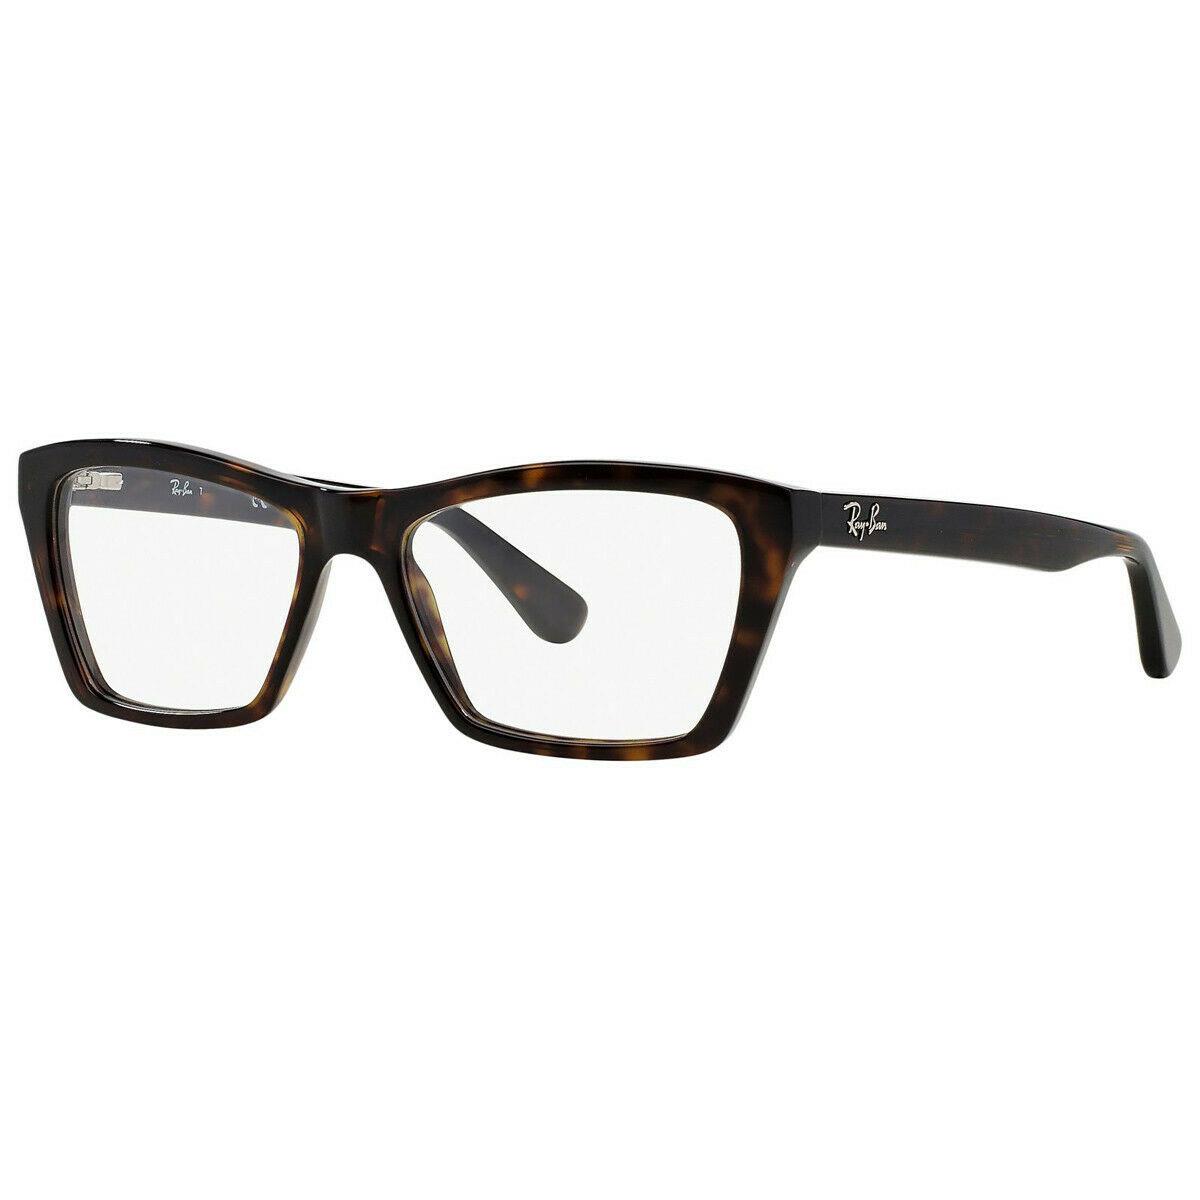 Ray-ban Ray Ban Tortoise RB5316 2012 53-16 Optical Eyeglasses Frames IN ...